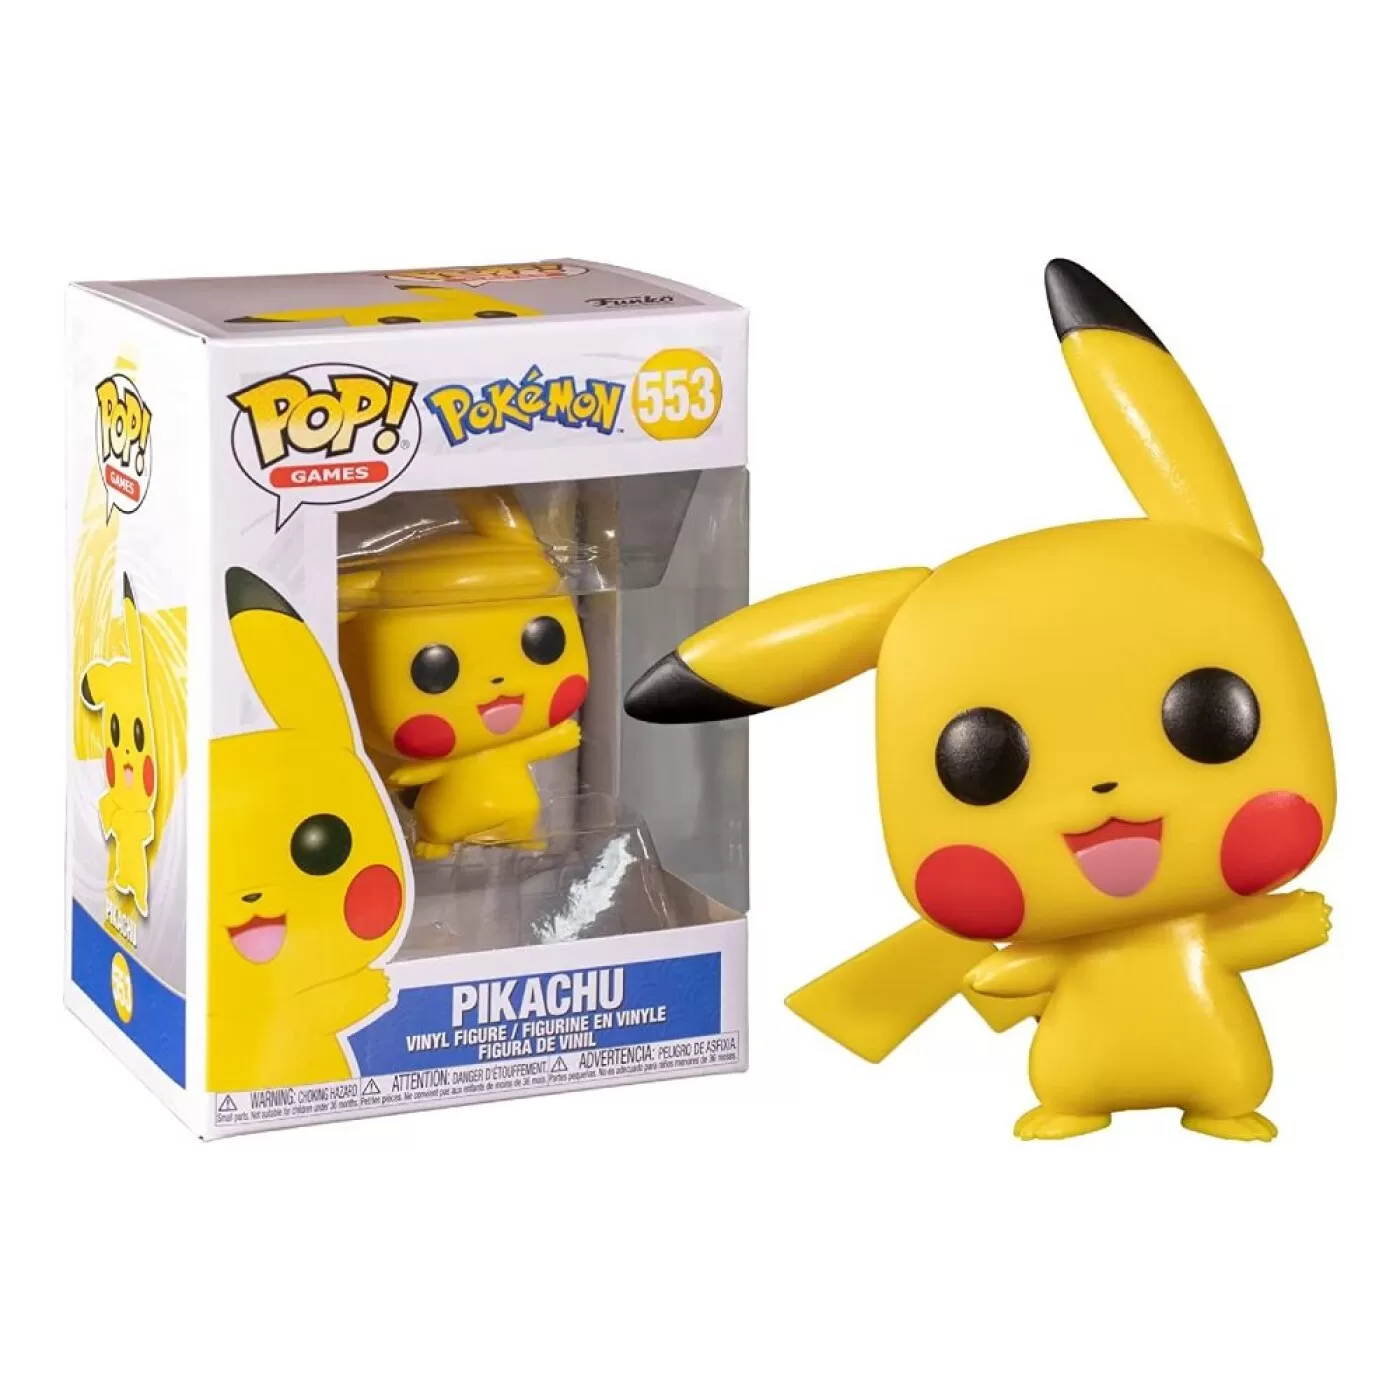 Pokémon - Pikachu eletrónico, POKEMON